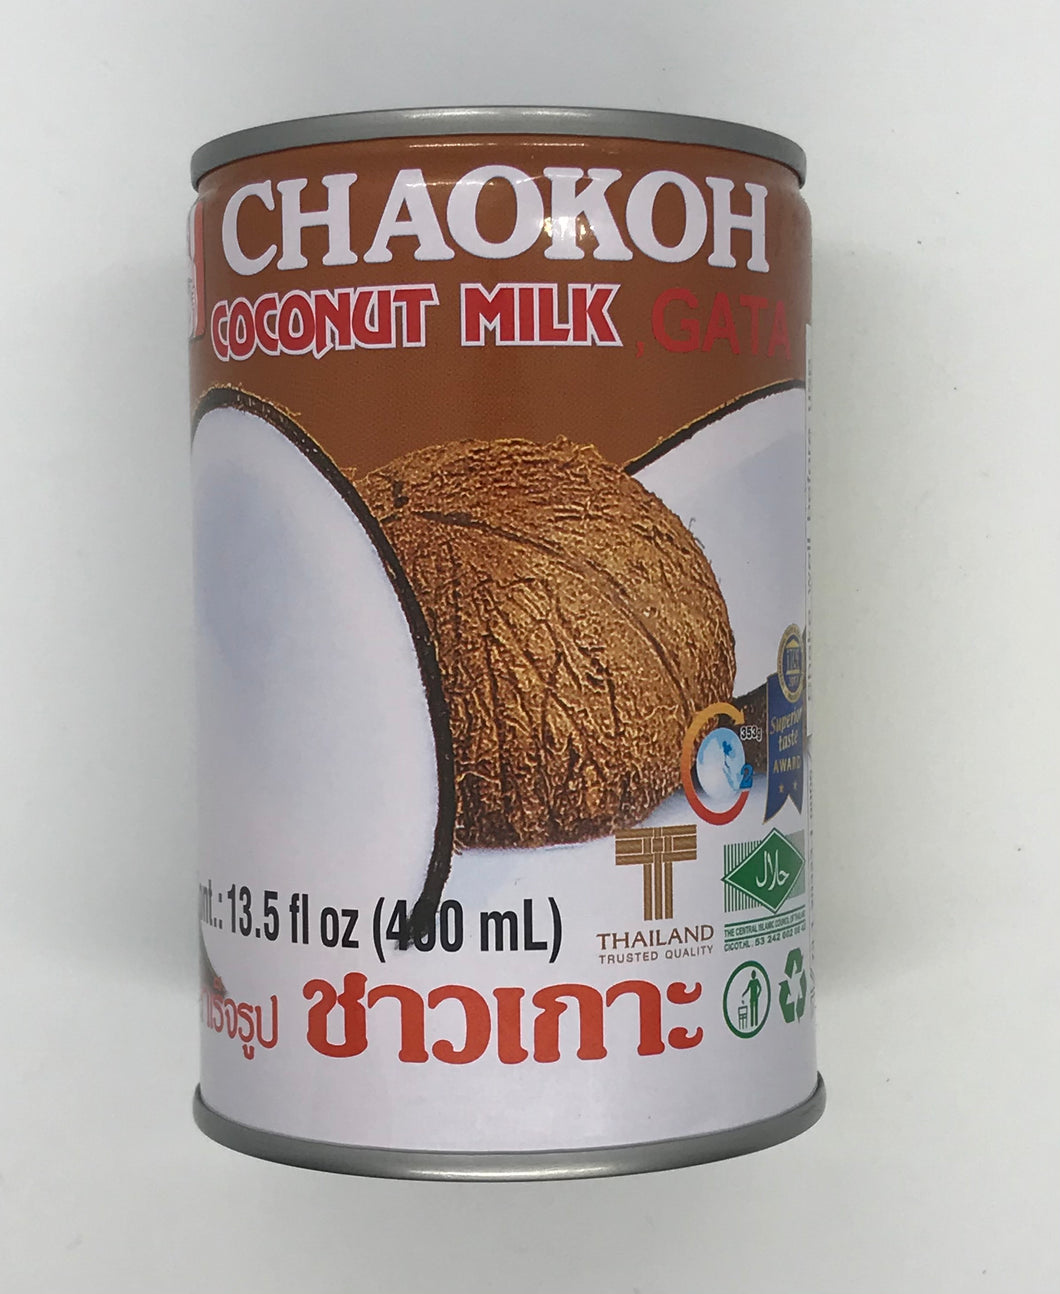 CHAOKOH Coconut Milk (အုန်း နို့ ဗူး)